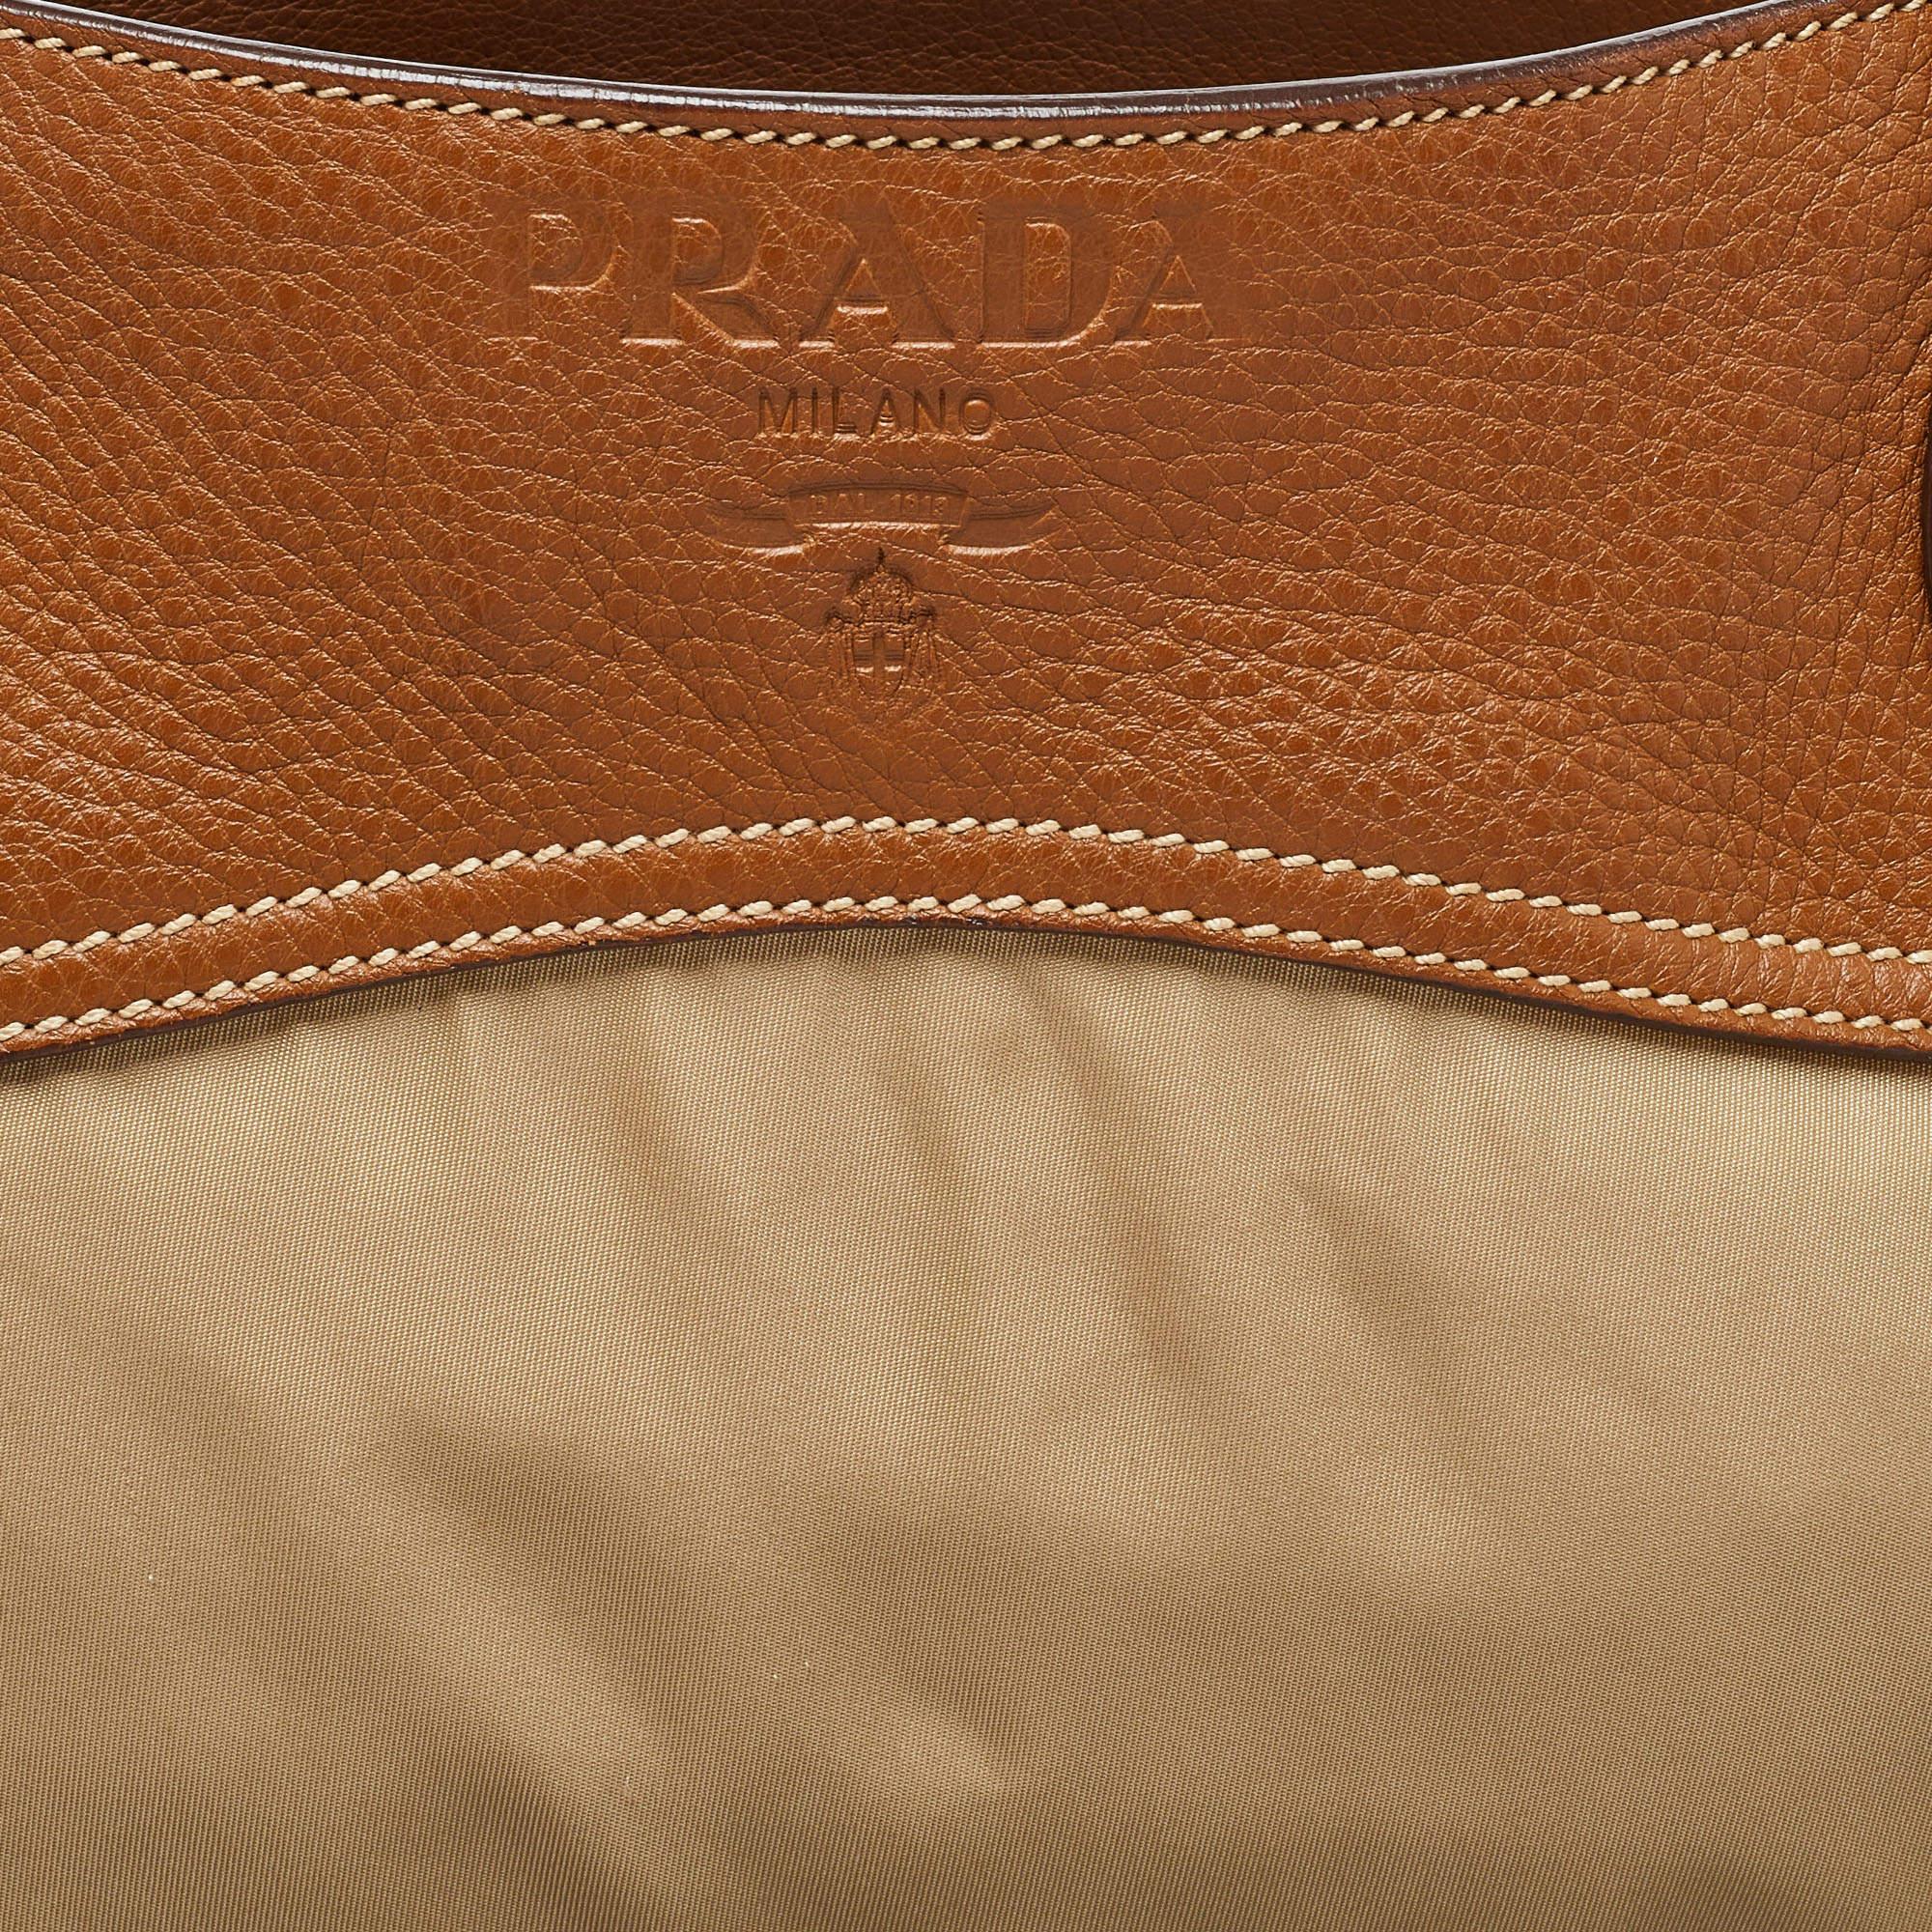 Prada Beige/Brown Leather and Nylon Logo Satchel For Sale 4